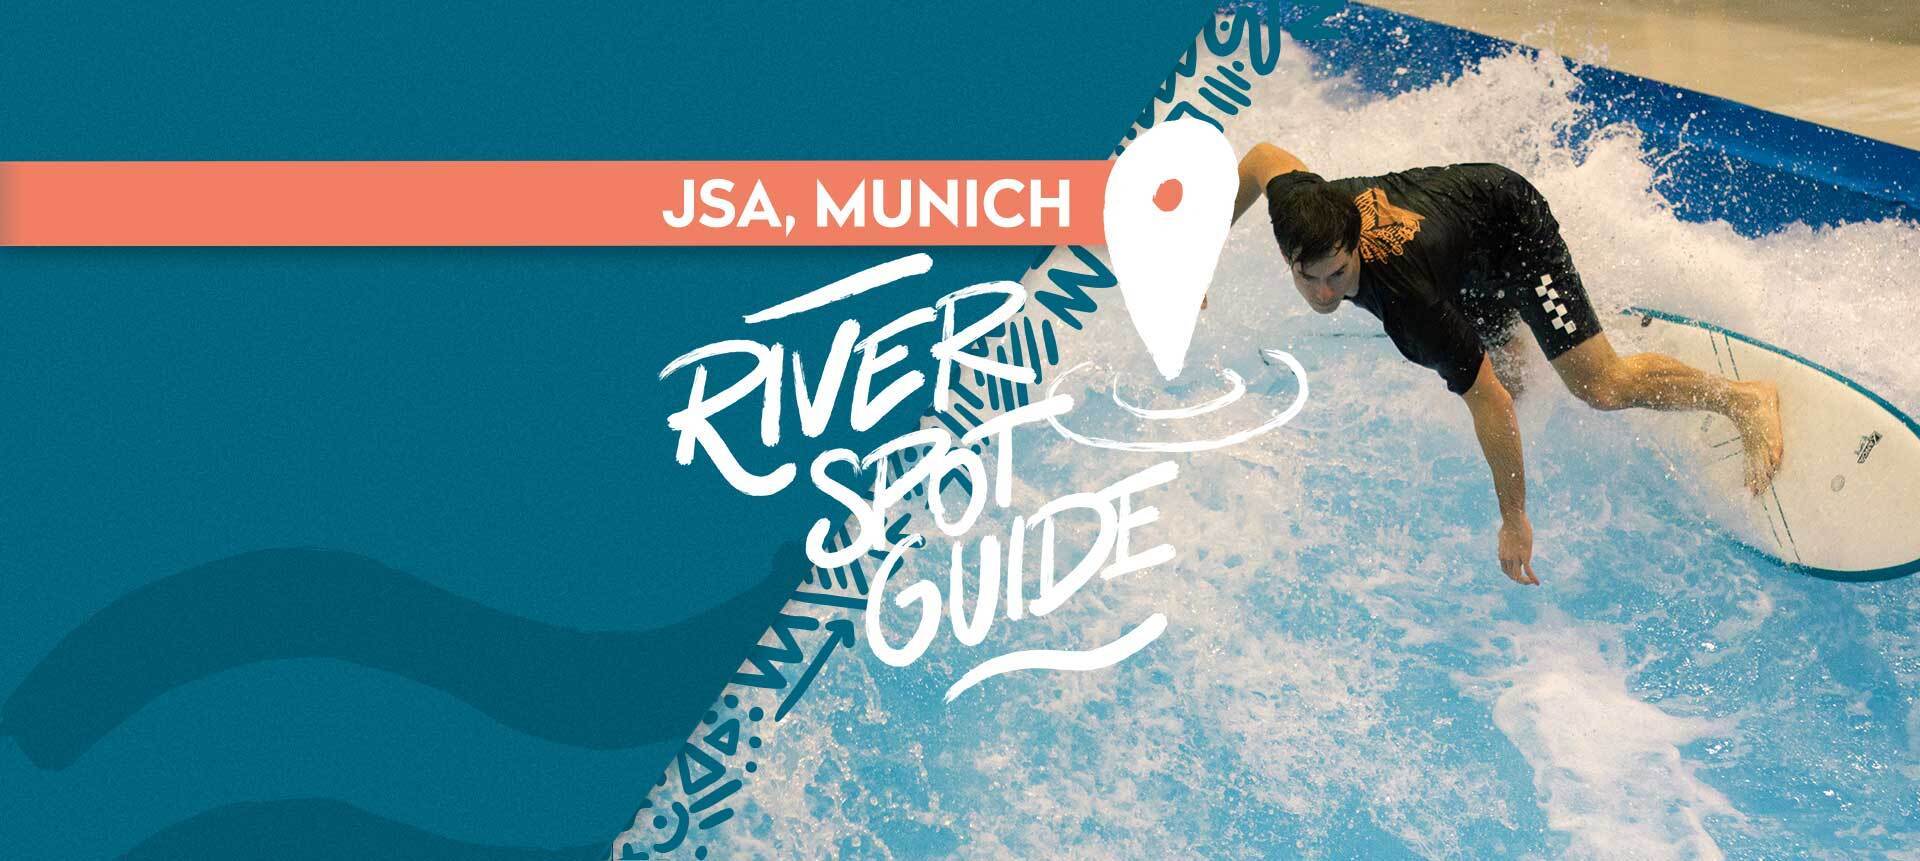 River Spot Guide Jochen Schweizer Arena Munich